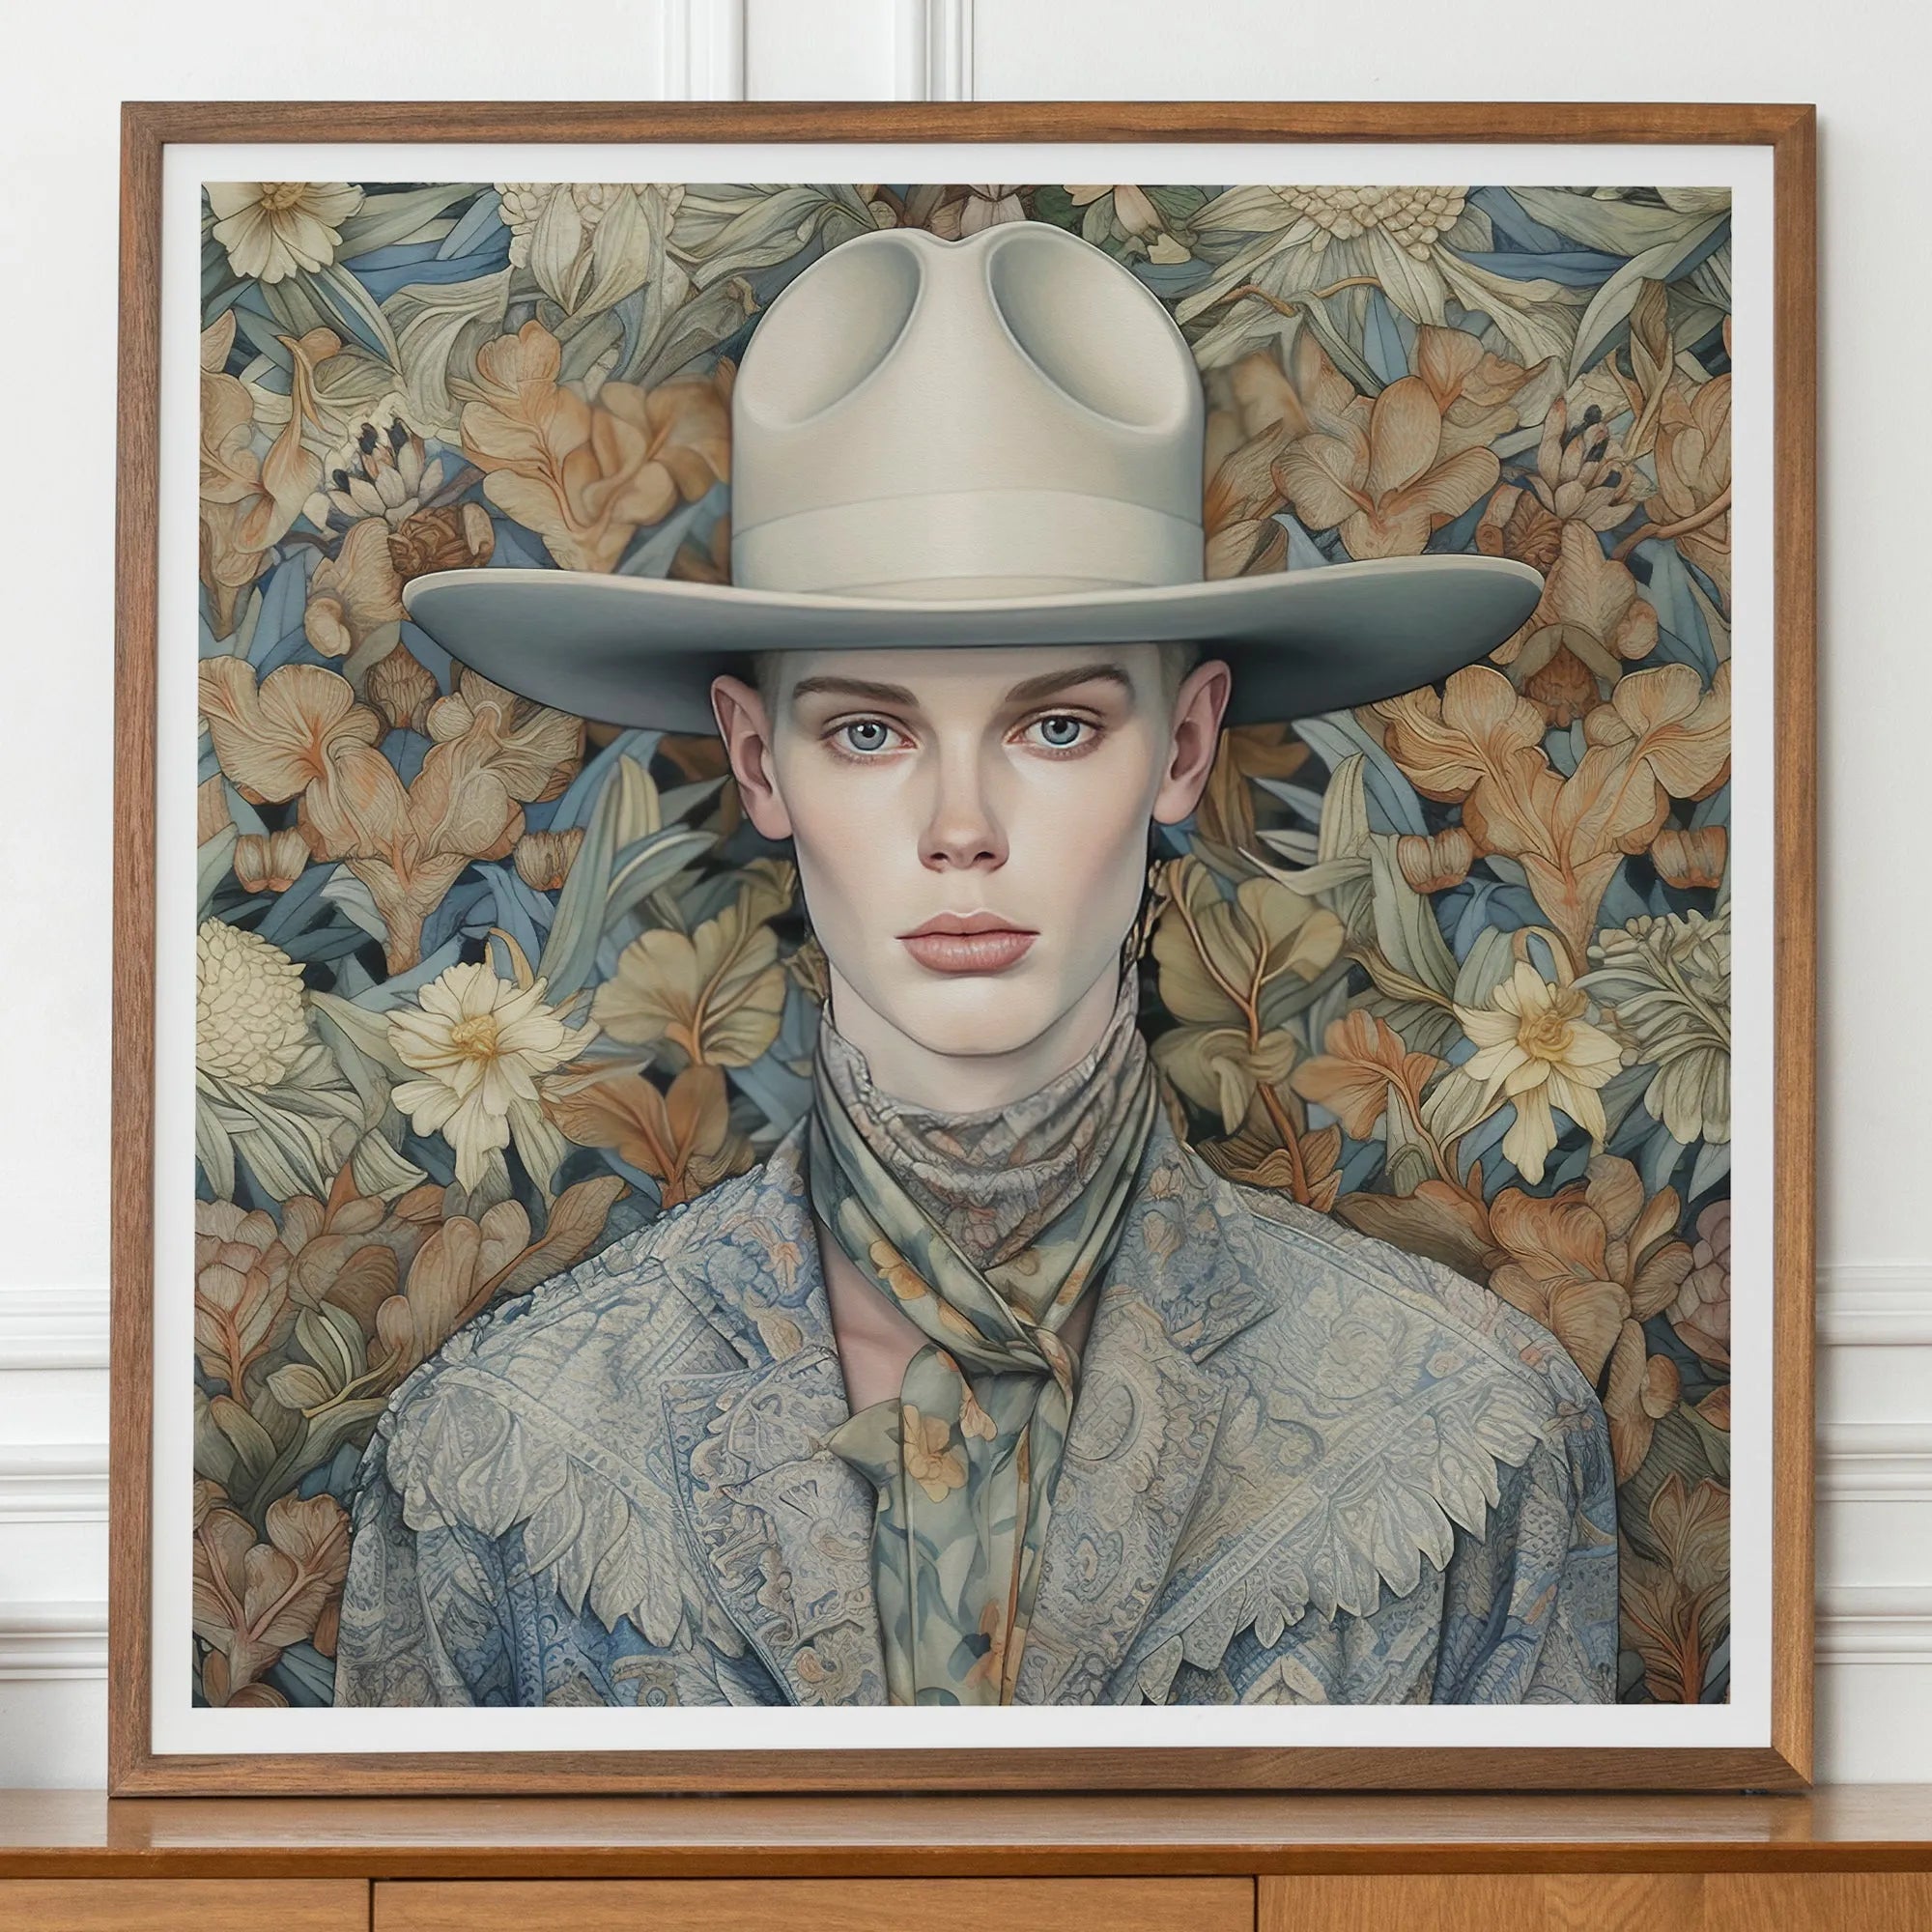 Jasper - Dandy Twink Cowboy Art Print - 30’x30’ - Posters Prints & Visual Artwork - Aesthetic Art